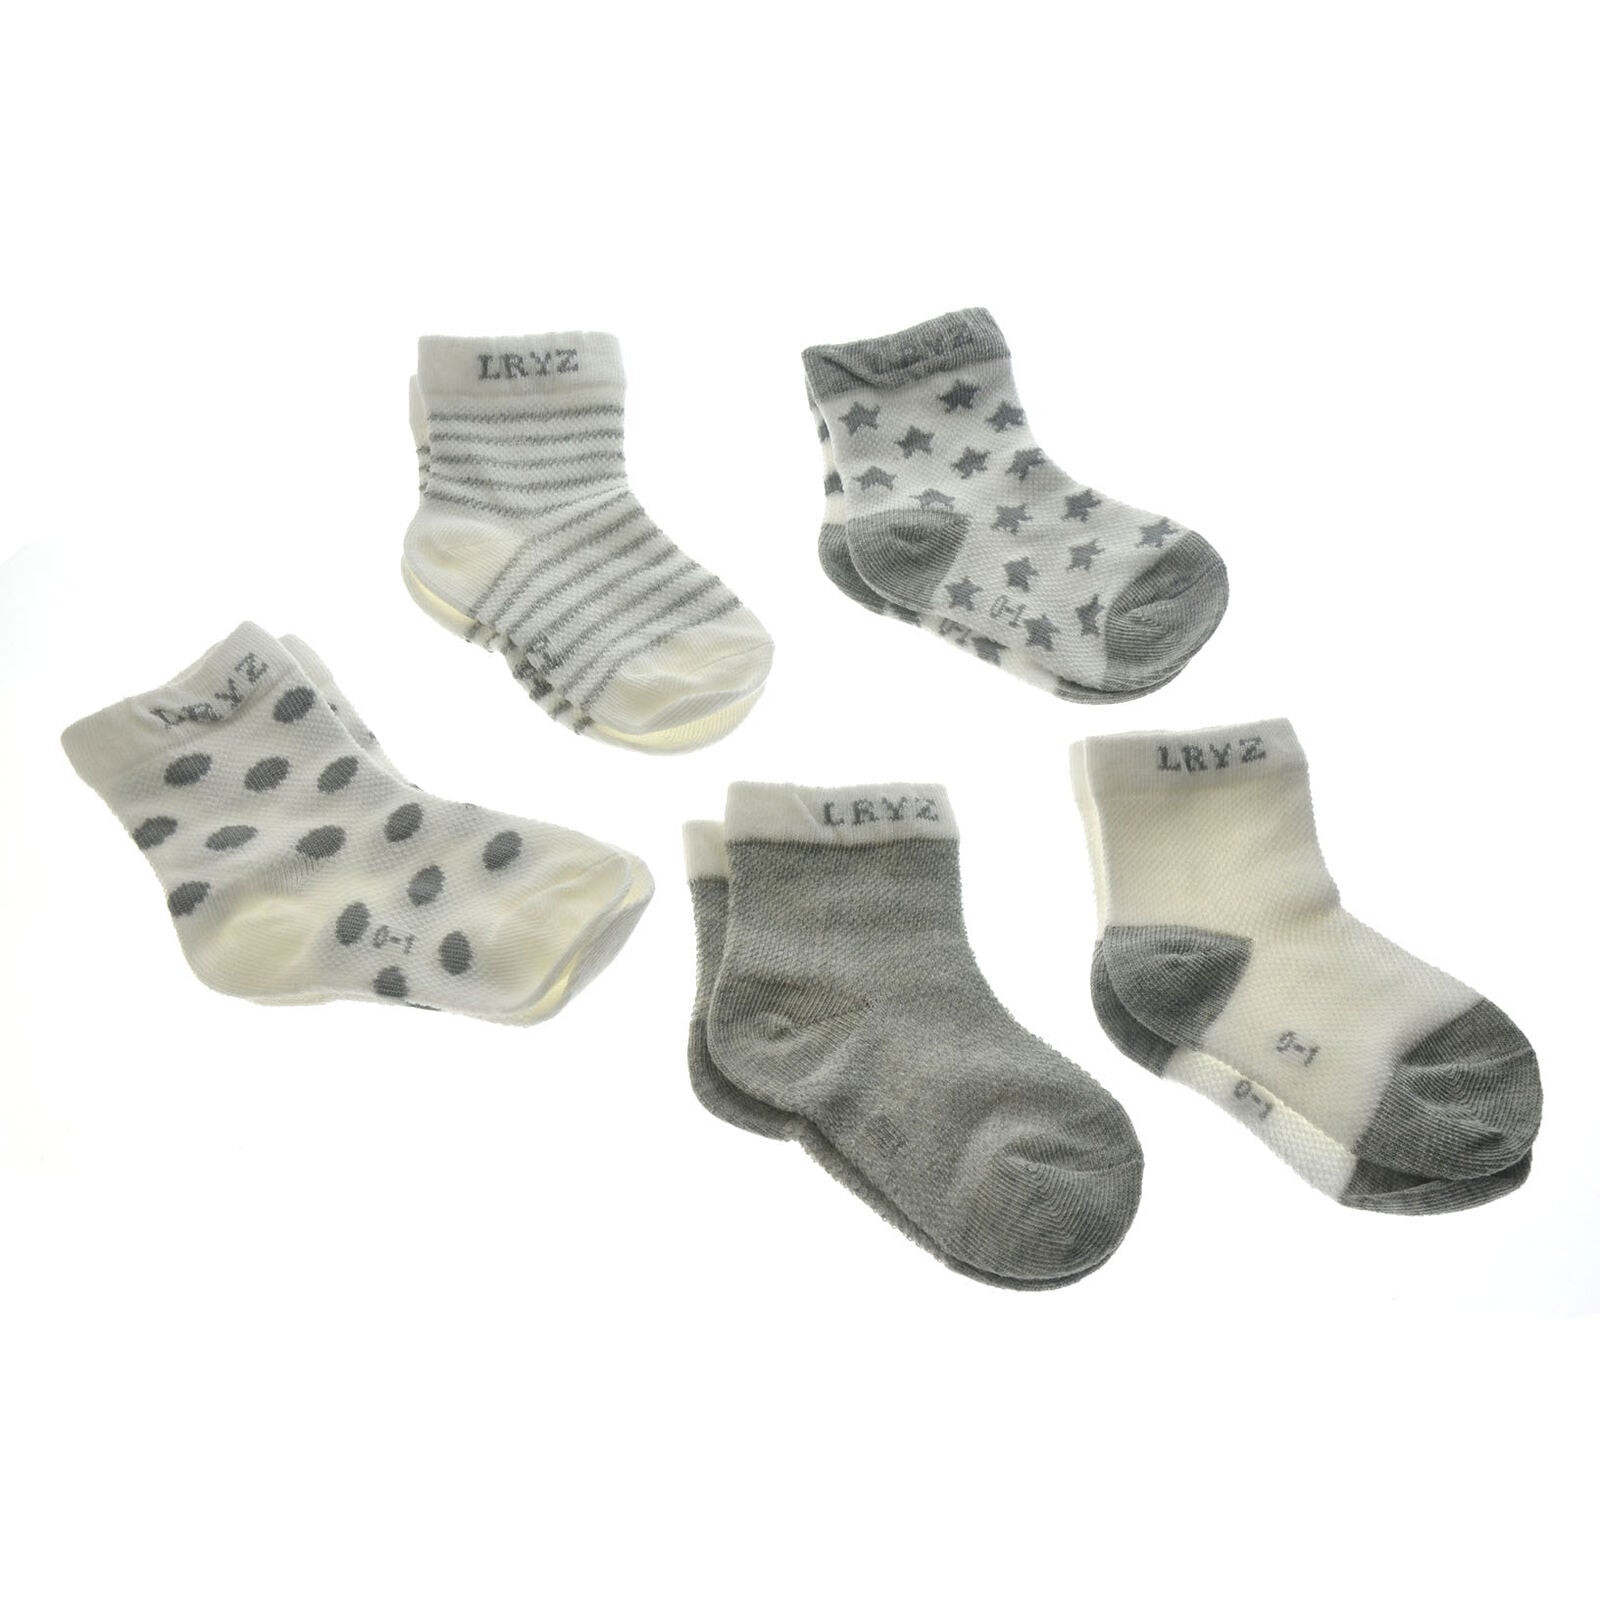 5Pcs Unisex Cartoon Comfortable Cotton Children's Socks Wild Socks